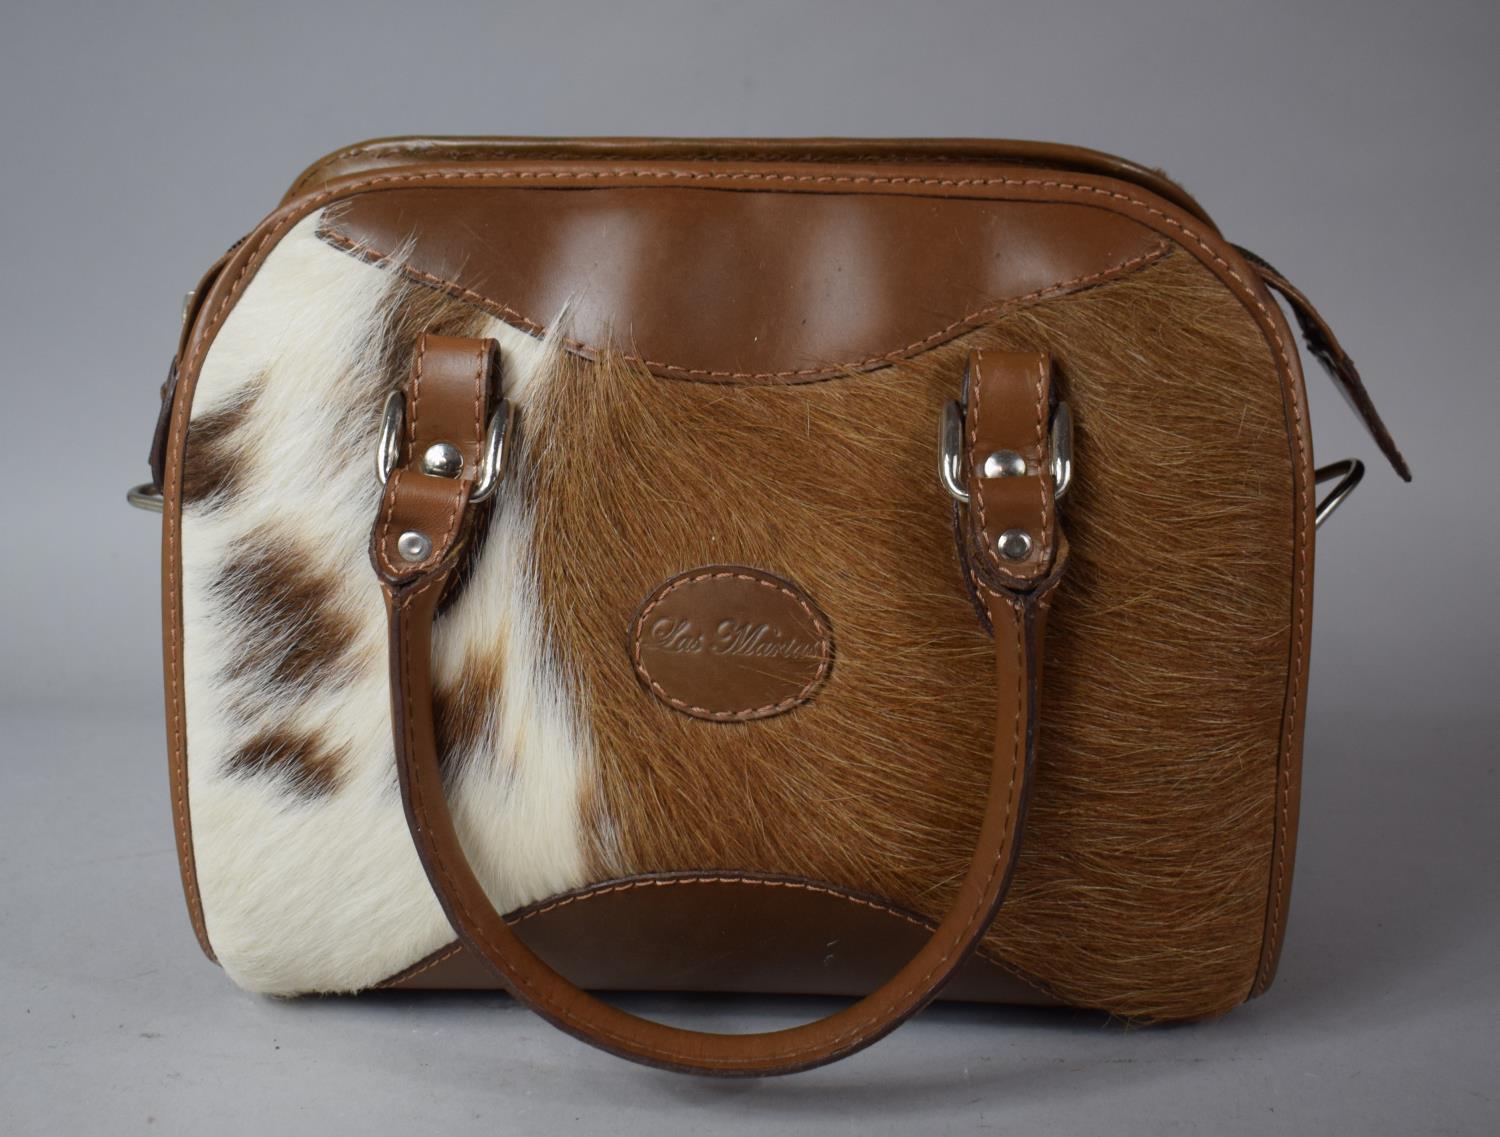 A Ladies Animal Skin and Leather Handbag by Las Marias, 28cm Wide